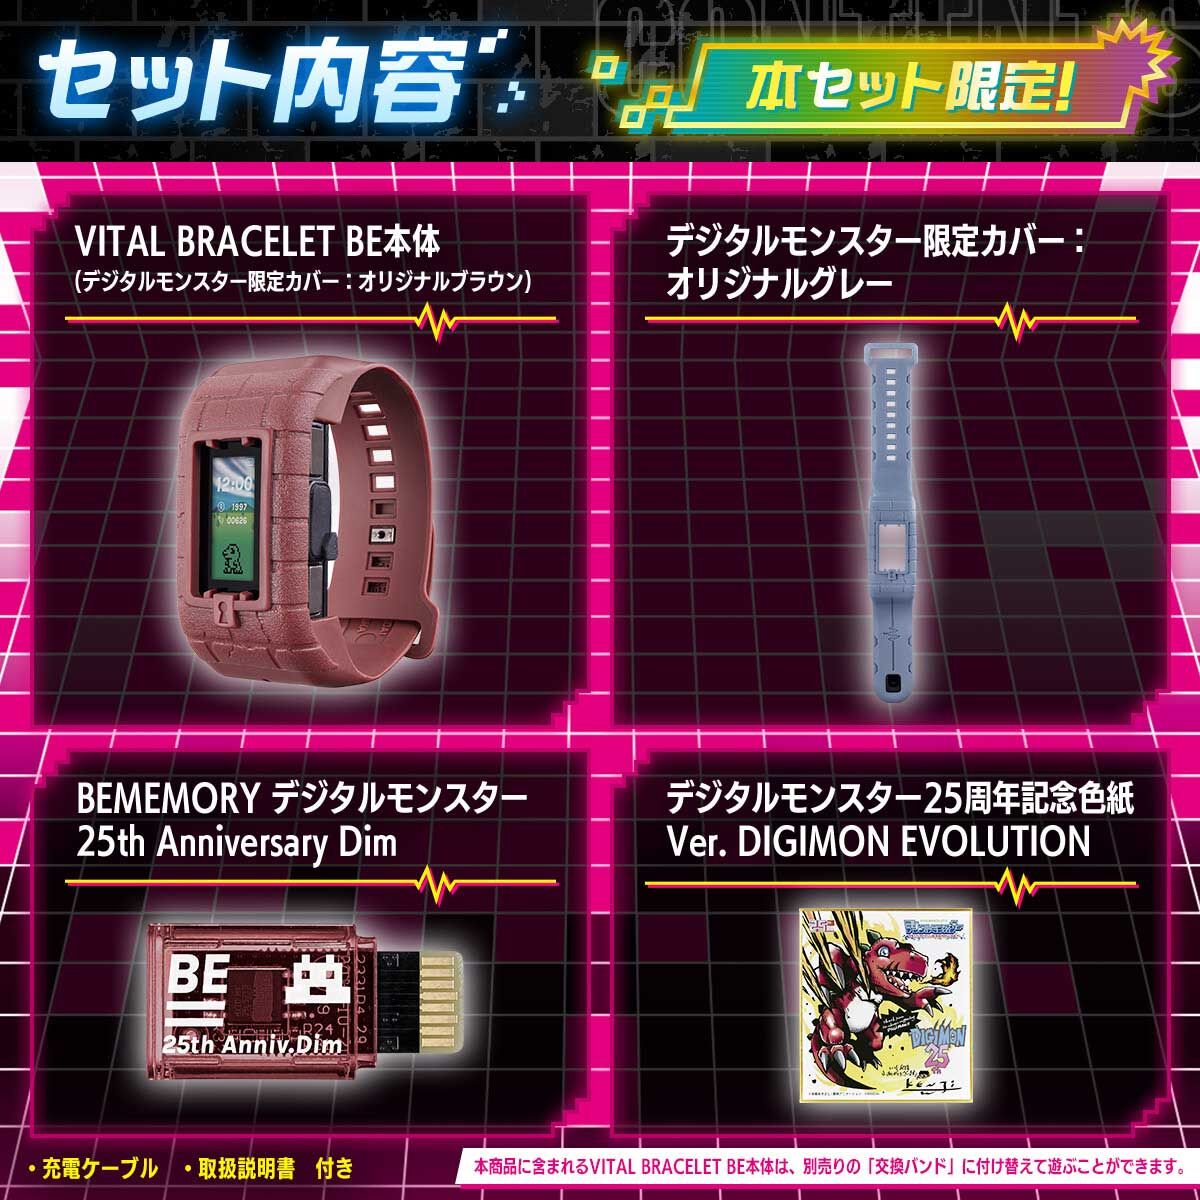 VITAL BRACELET BE デジタルモンスター 25th Anniversary set 